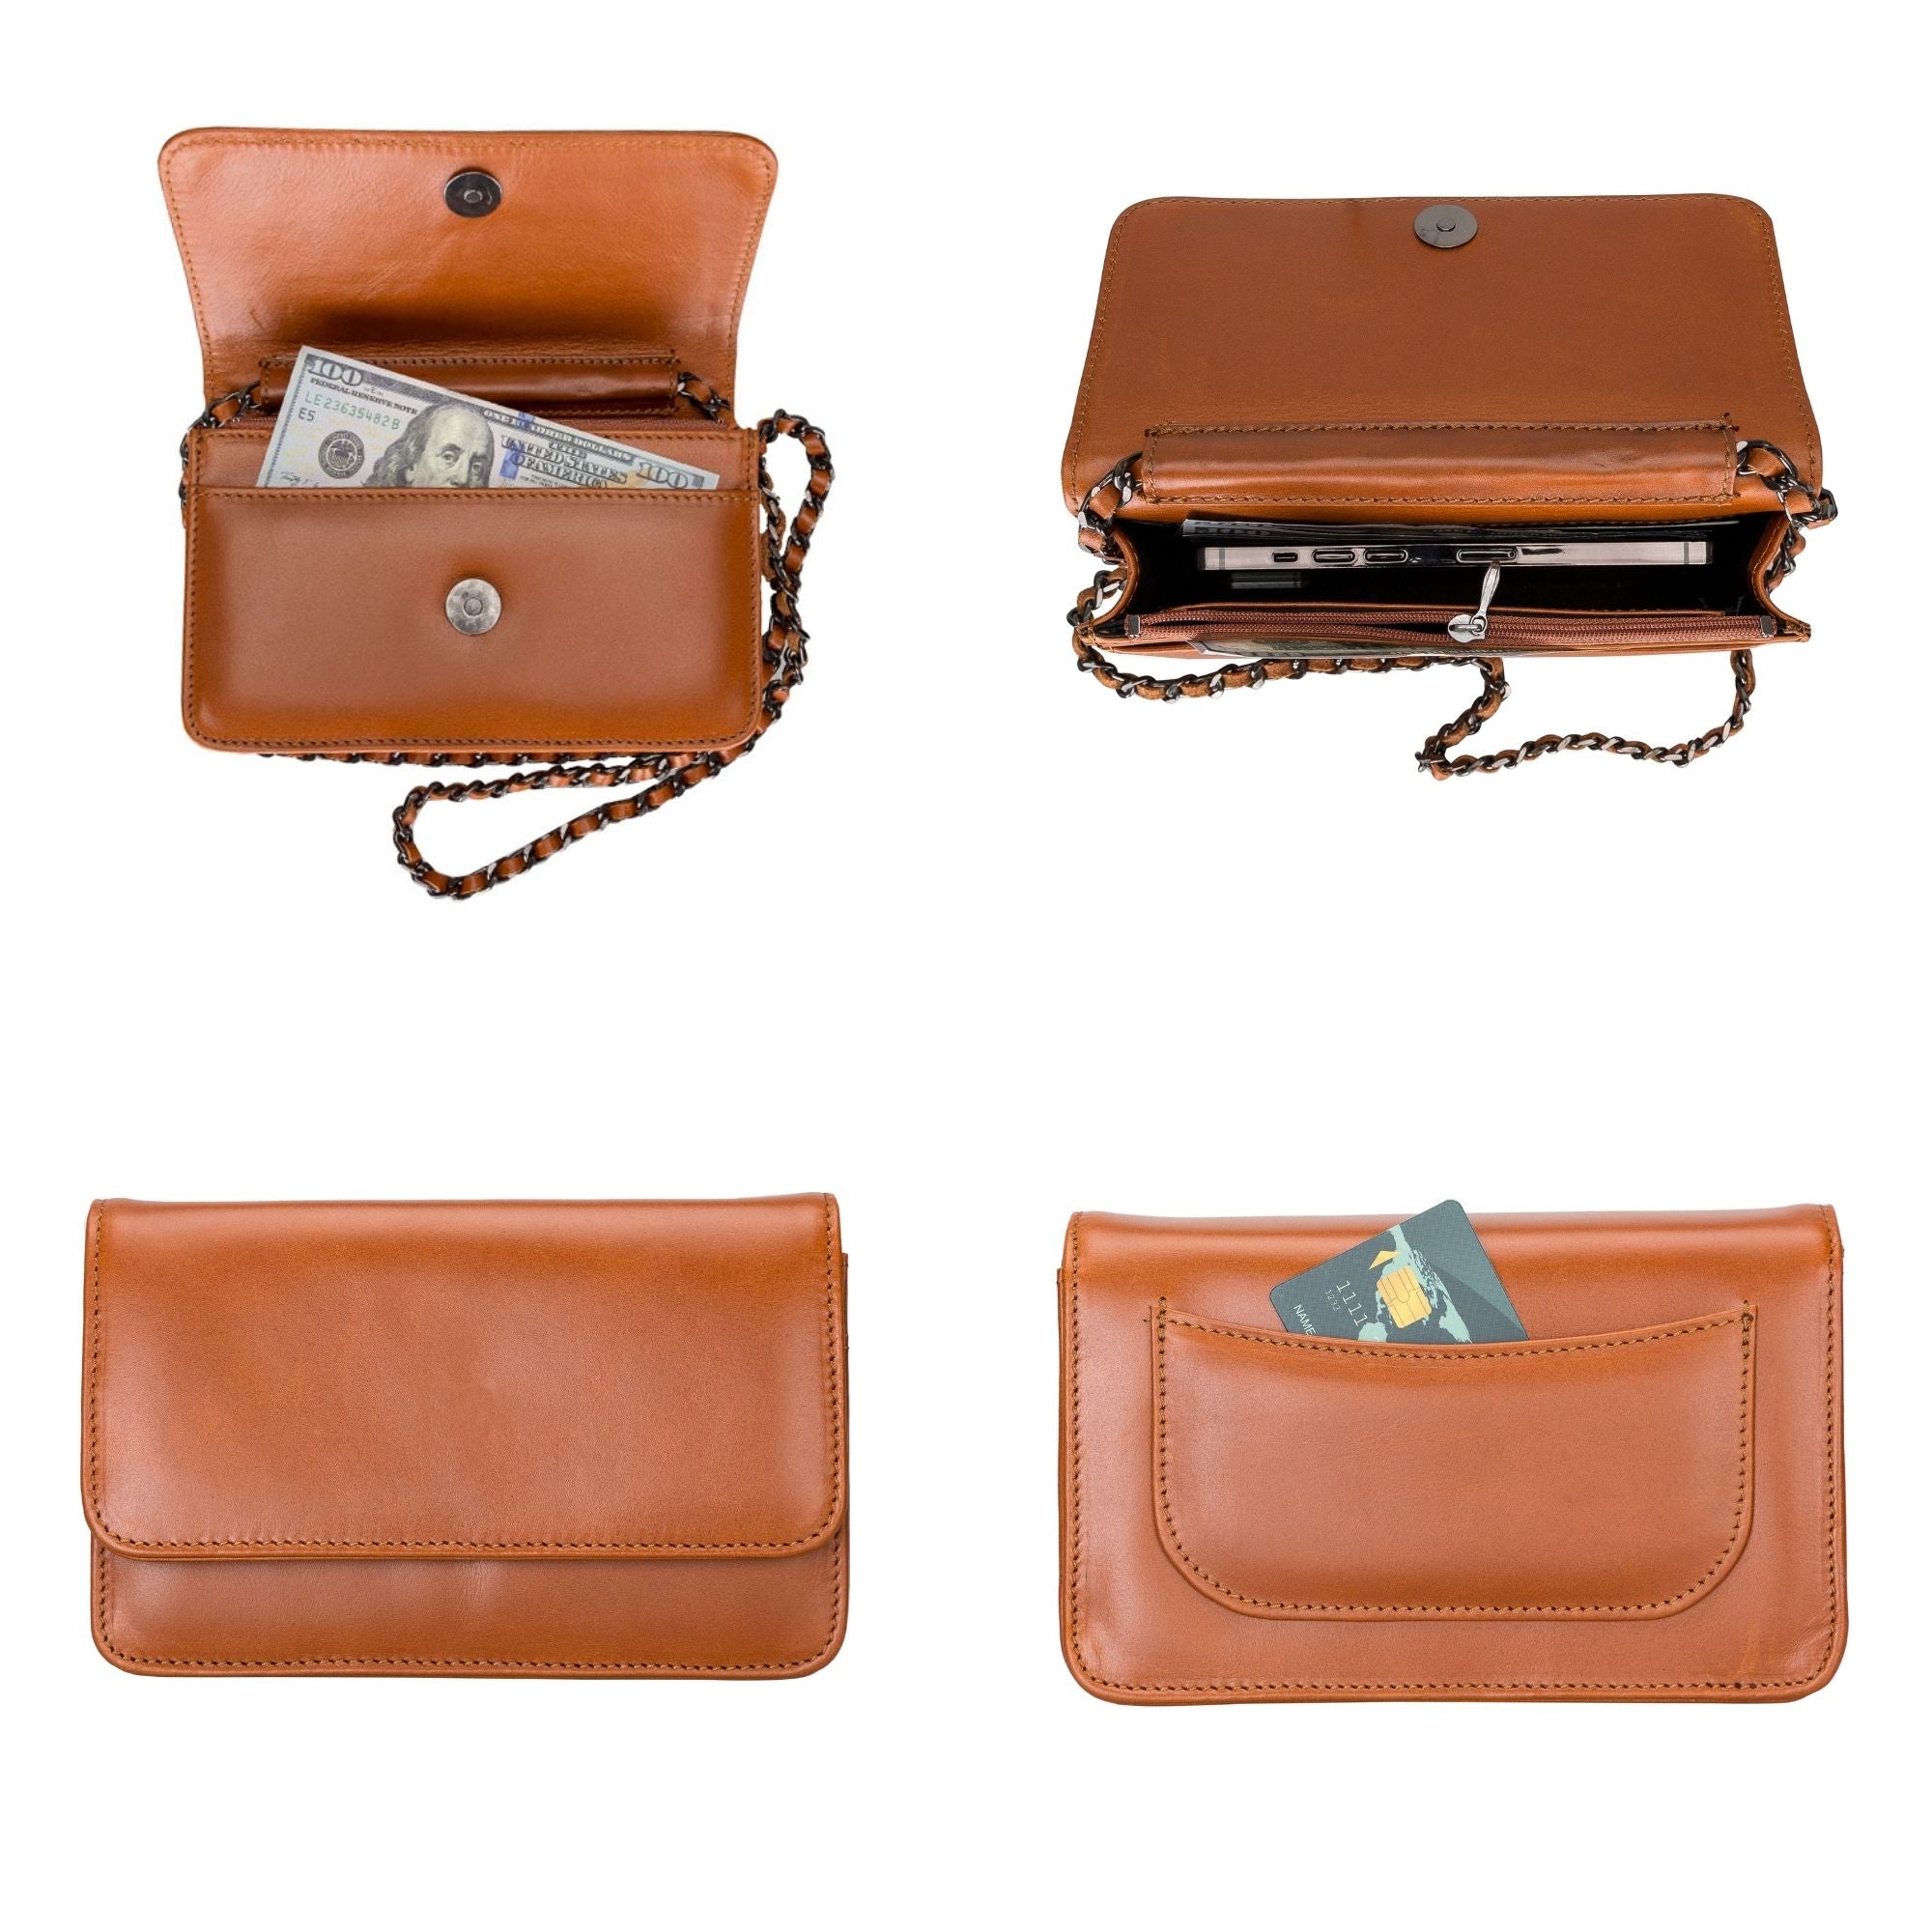 Evanston Minimalist Leather Handbag for Women - Tan - TORONATA